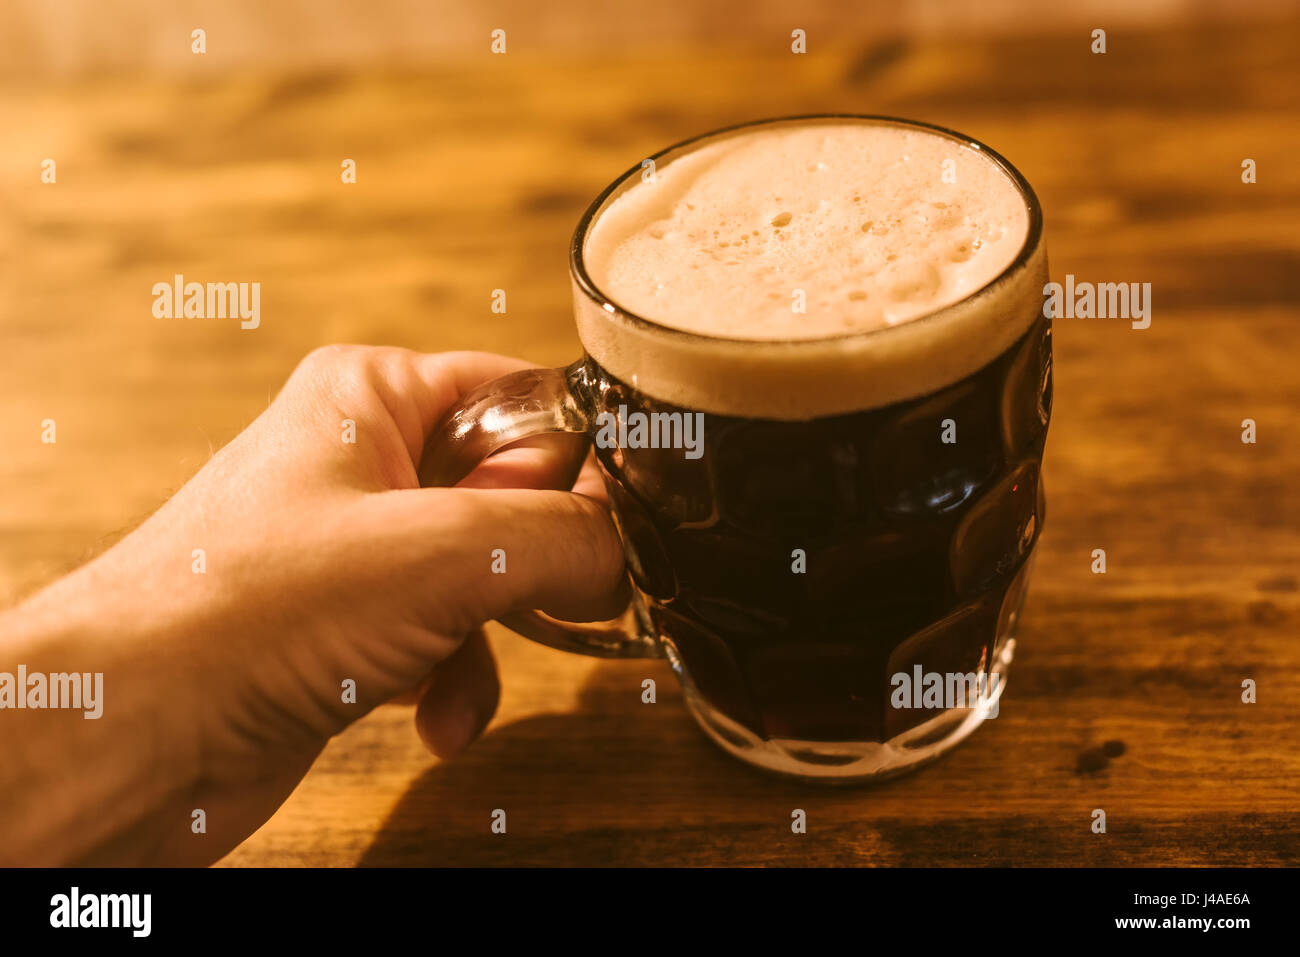 Man drinking dark beer in british dimpled glass pint mug on bar table Stock Photo